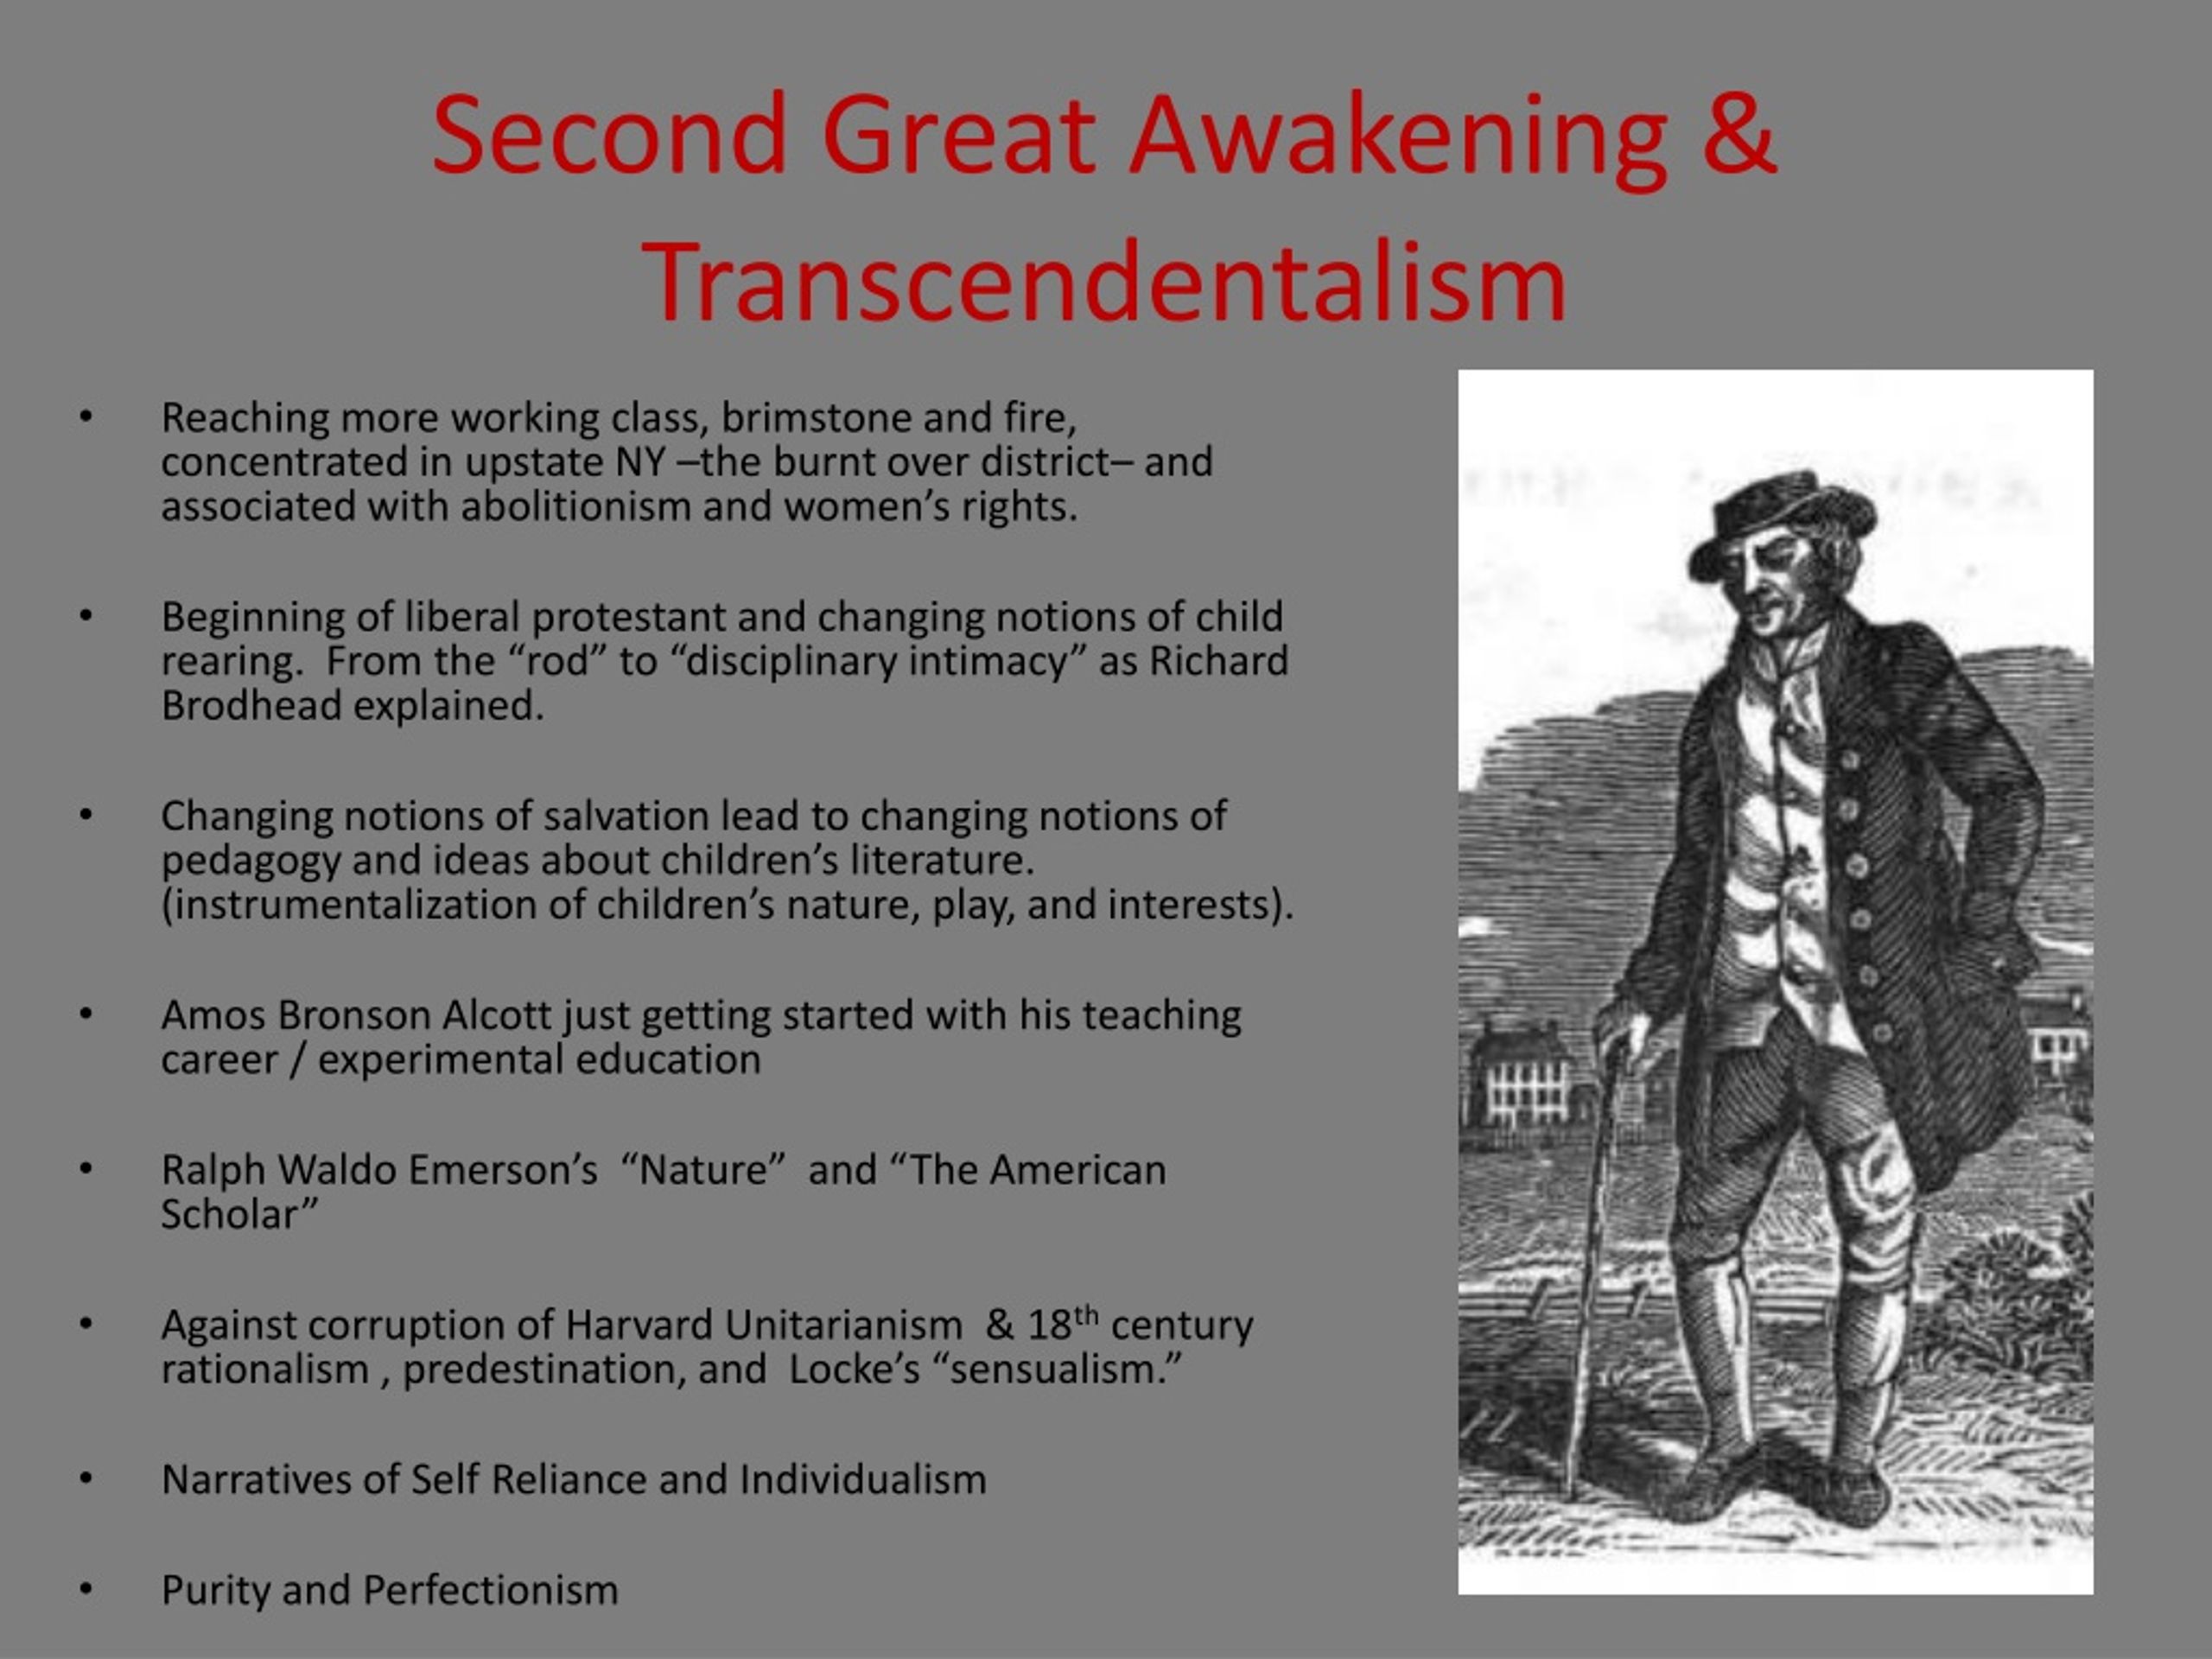 Similarities Between Transcendentalism And The Second Great Awakening